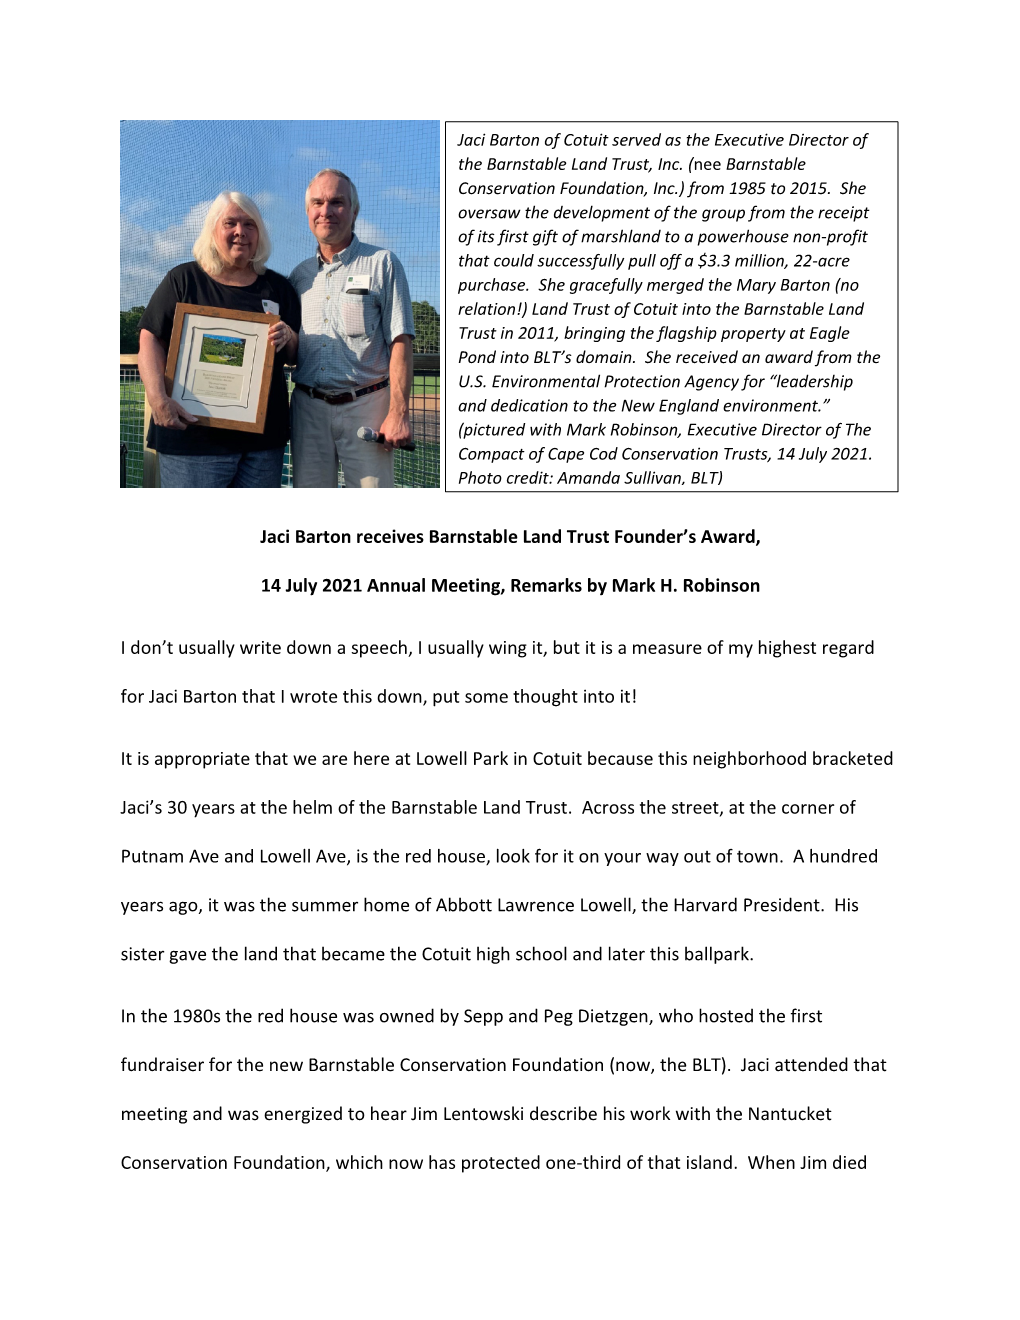 Jaci Barton Receives Barnstable Land Trust Founder's Award, 14 July